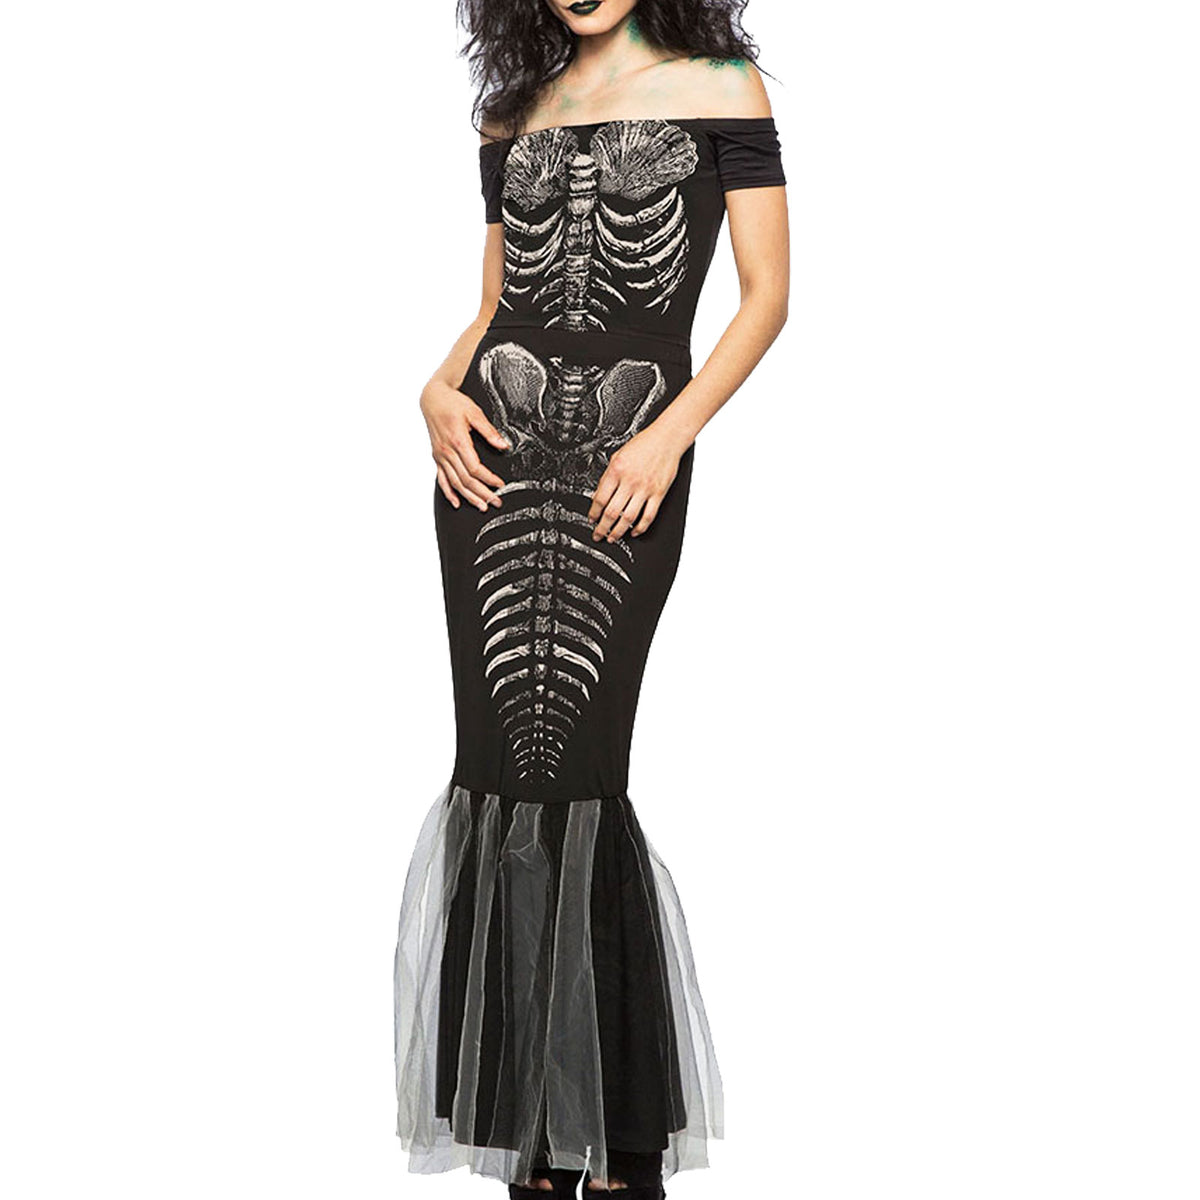 Costume vestito carnevale donna DL-2153 — Toocool